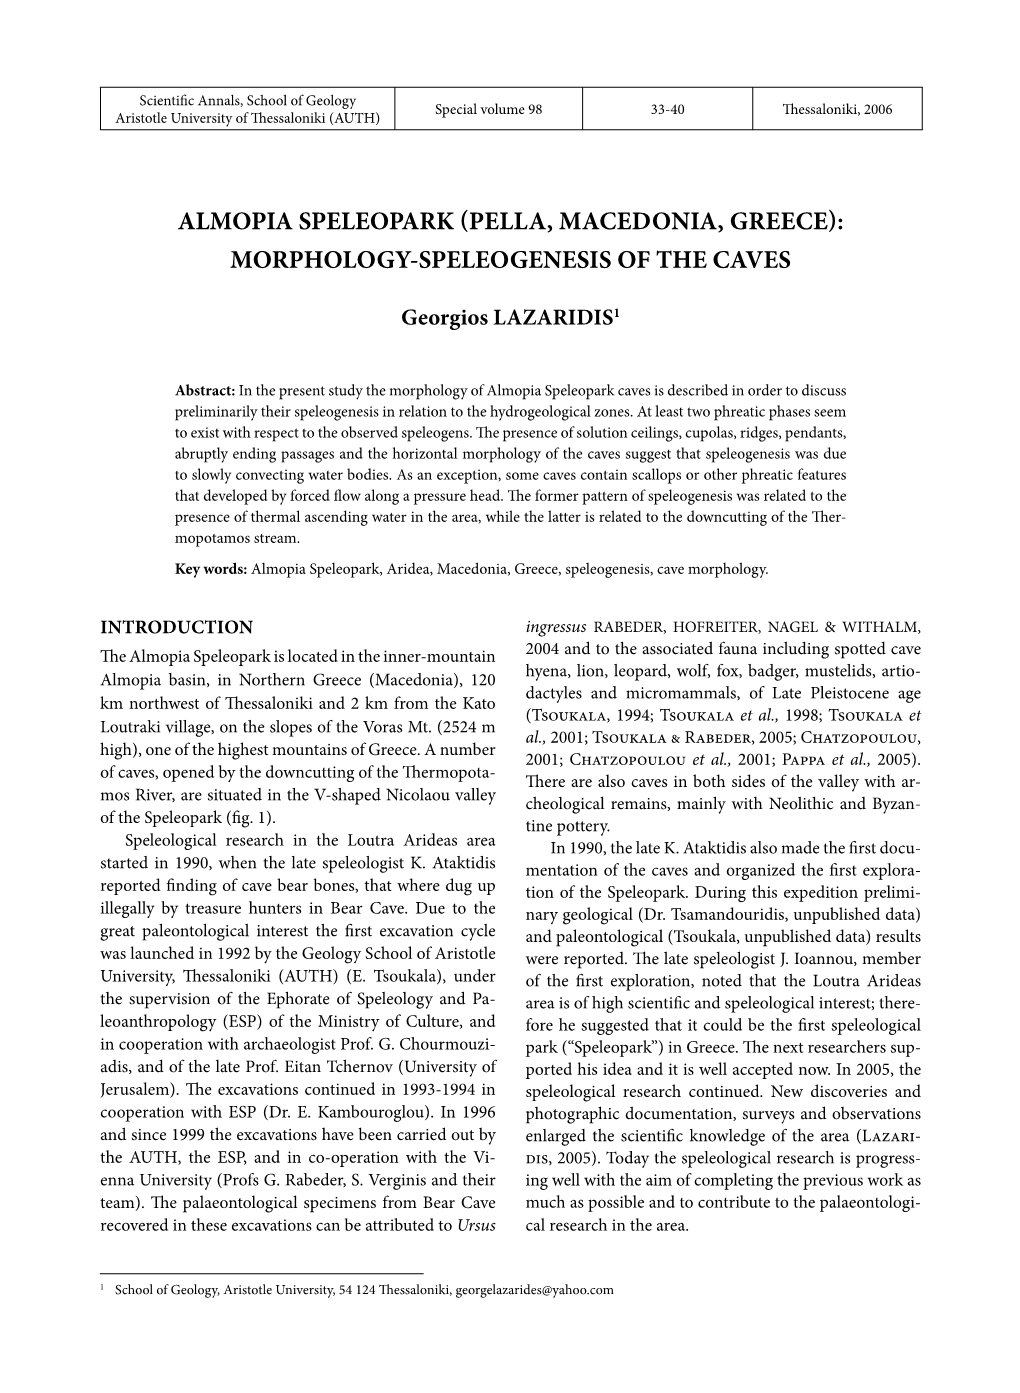 Almopia Speleopark (Pella, Macedonia, Greece): Morphology-Speleogenesis of the Caves